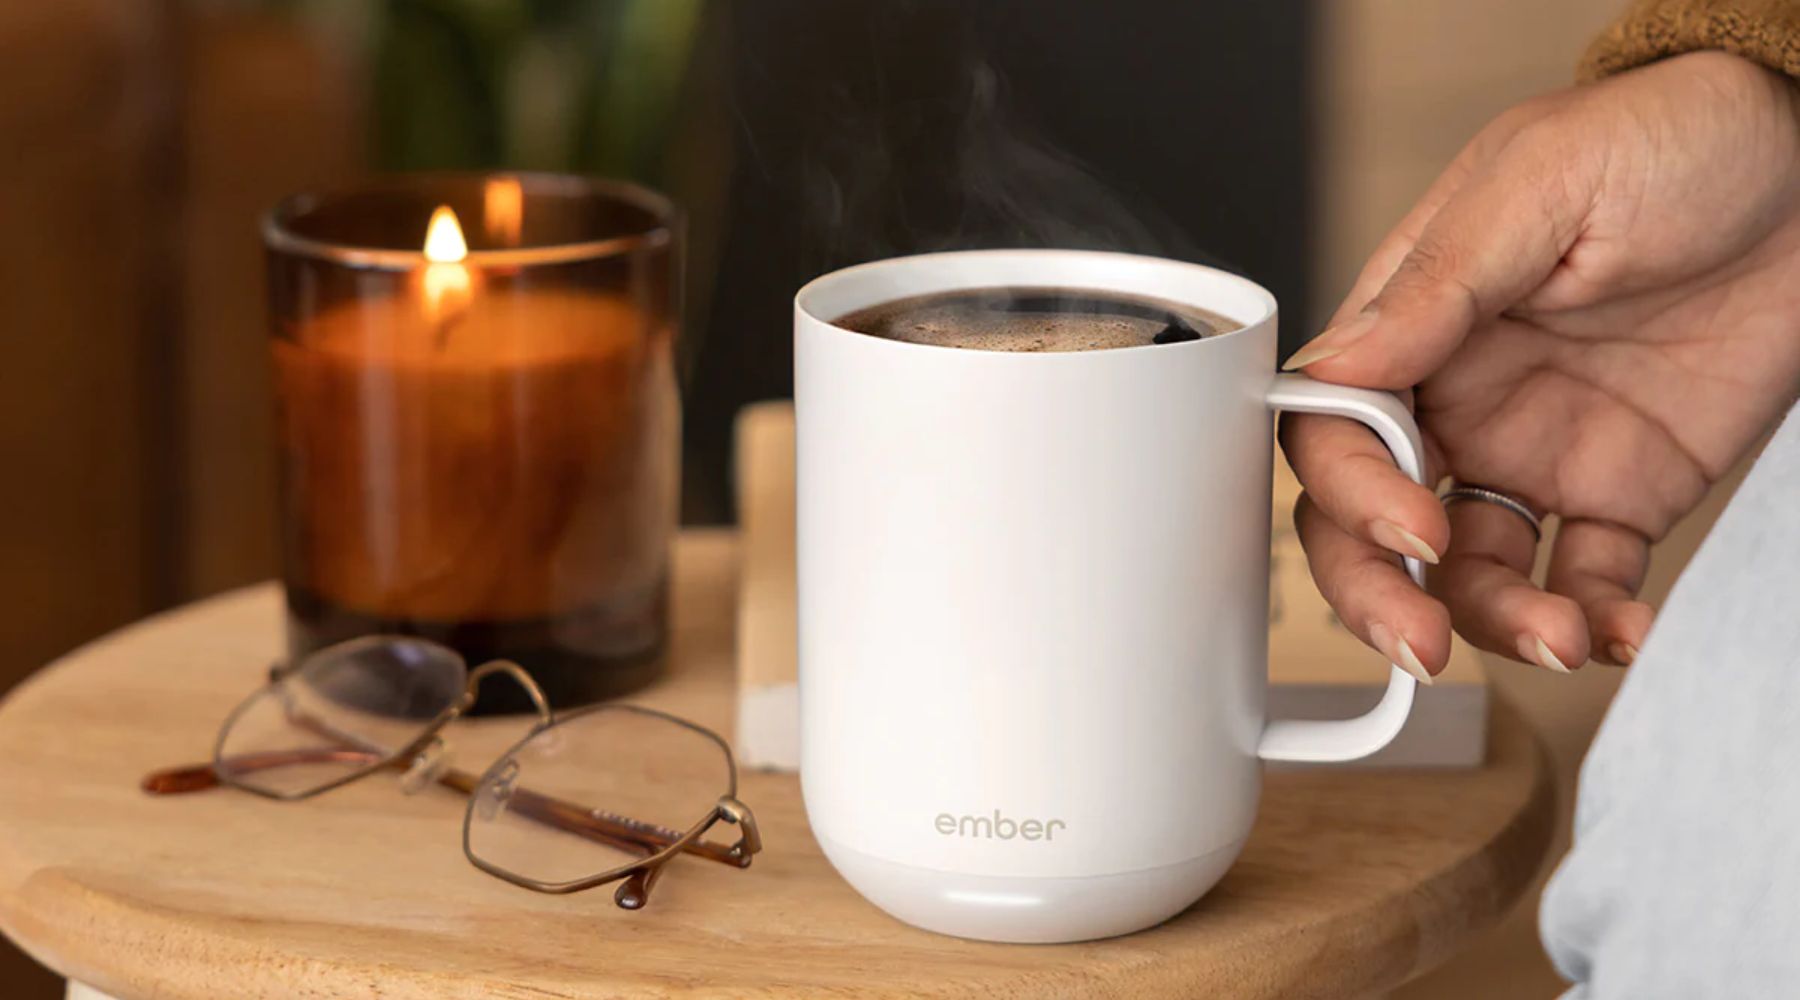 Savor Every Sip: A Review of the Ember Smart Mug and Travel Mug